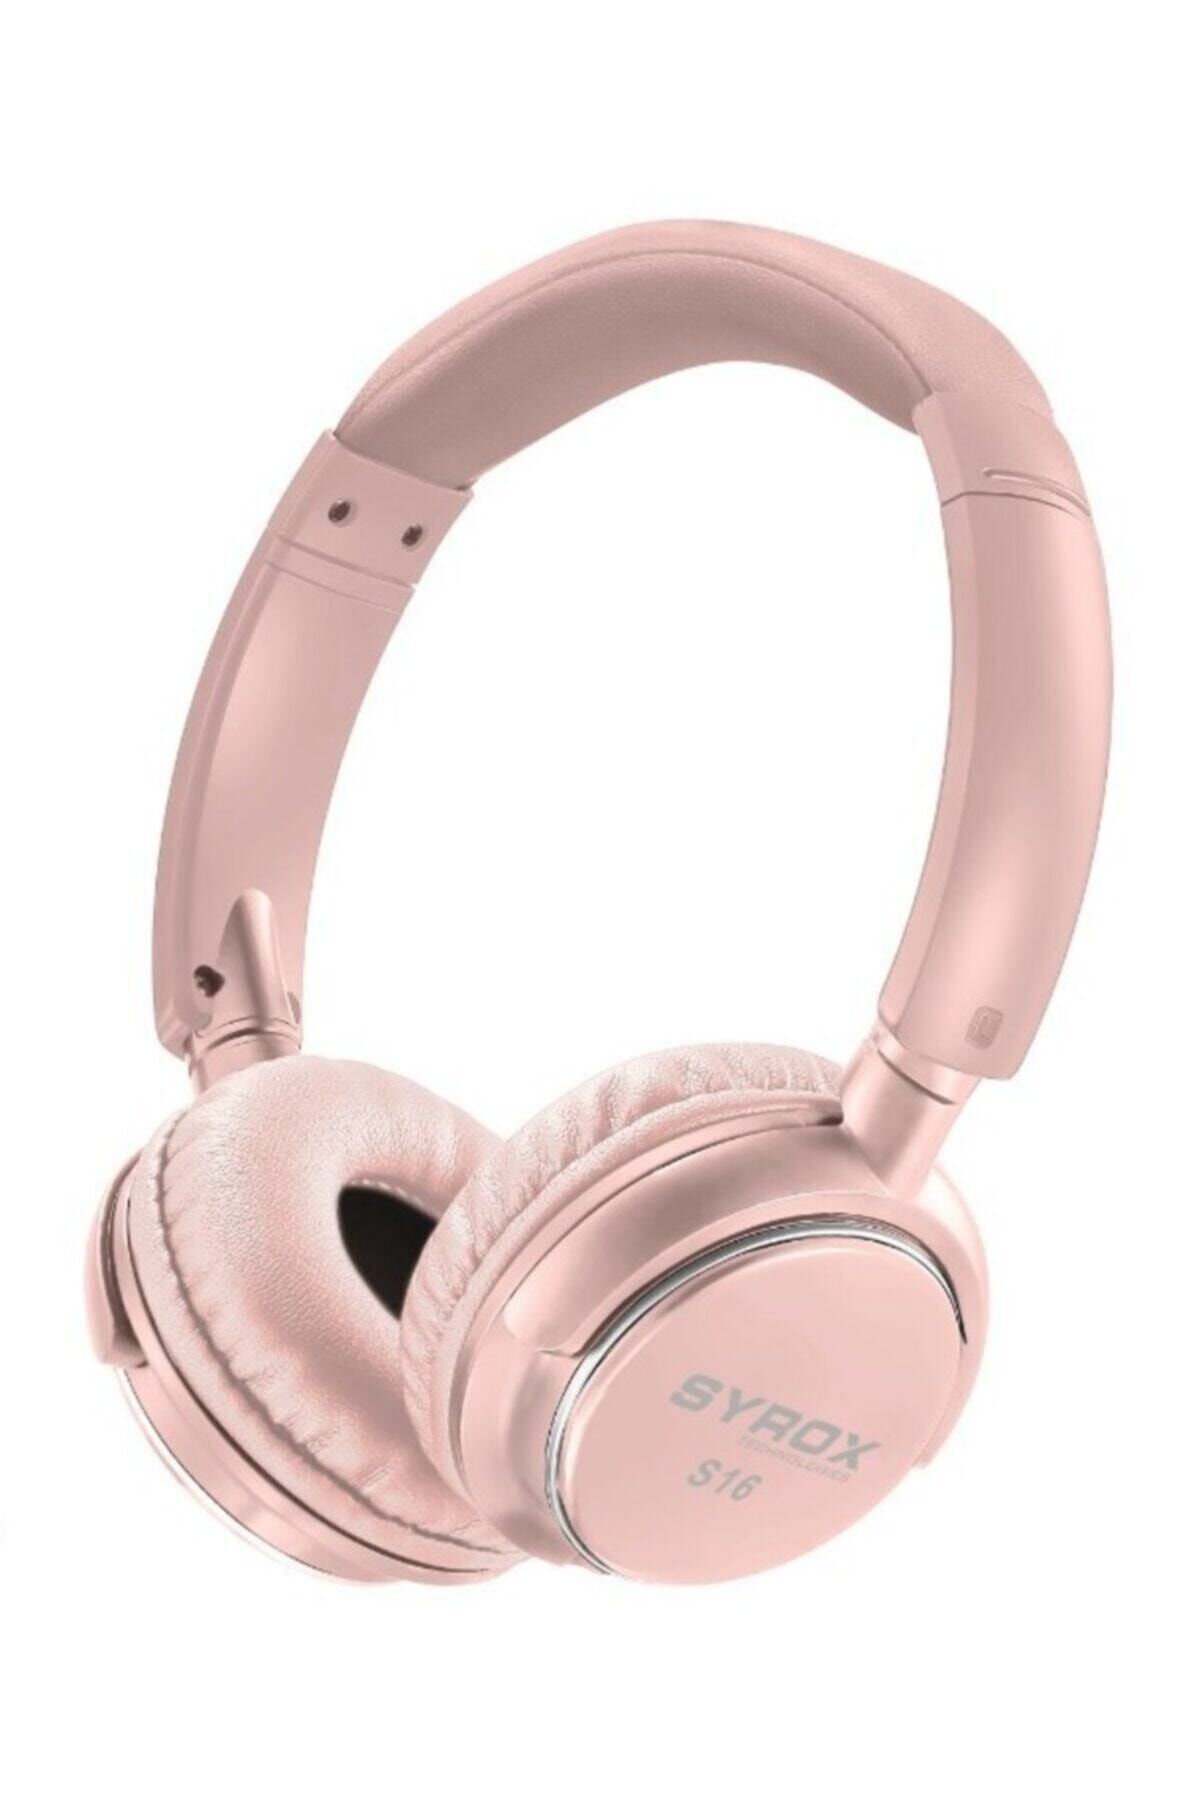 Syrox S16 Bluetooth 4 Fonksiyonlu Kulak Üstü Kulaklık